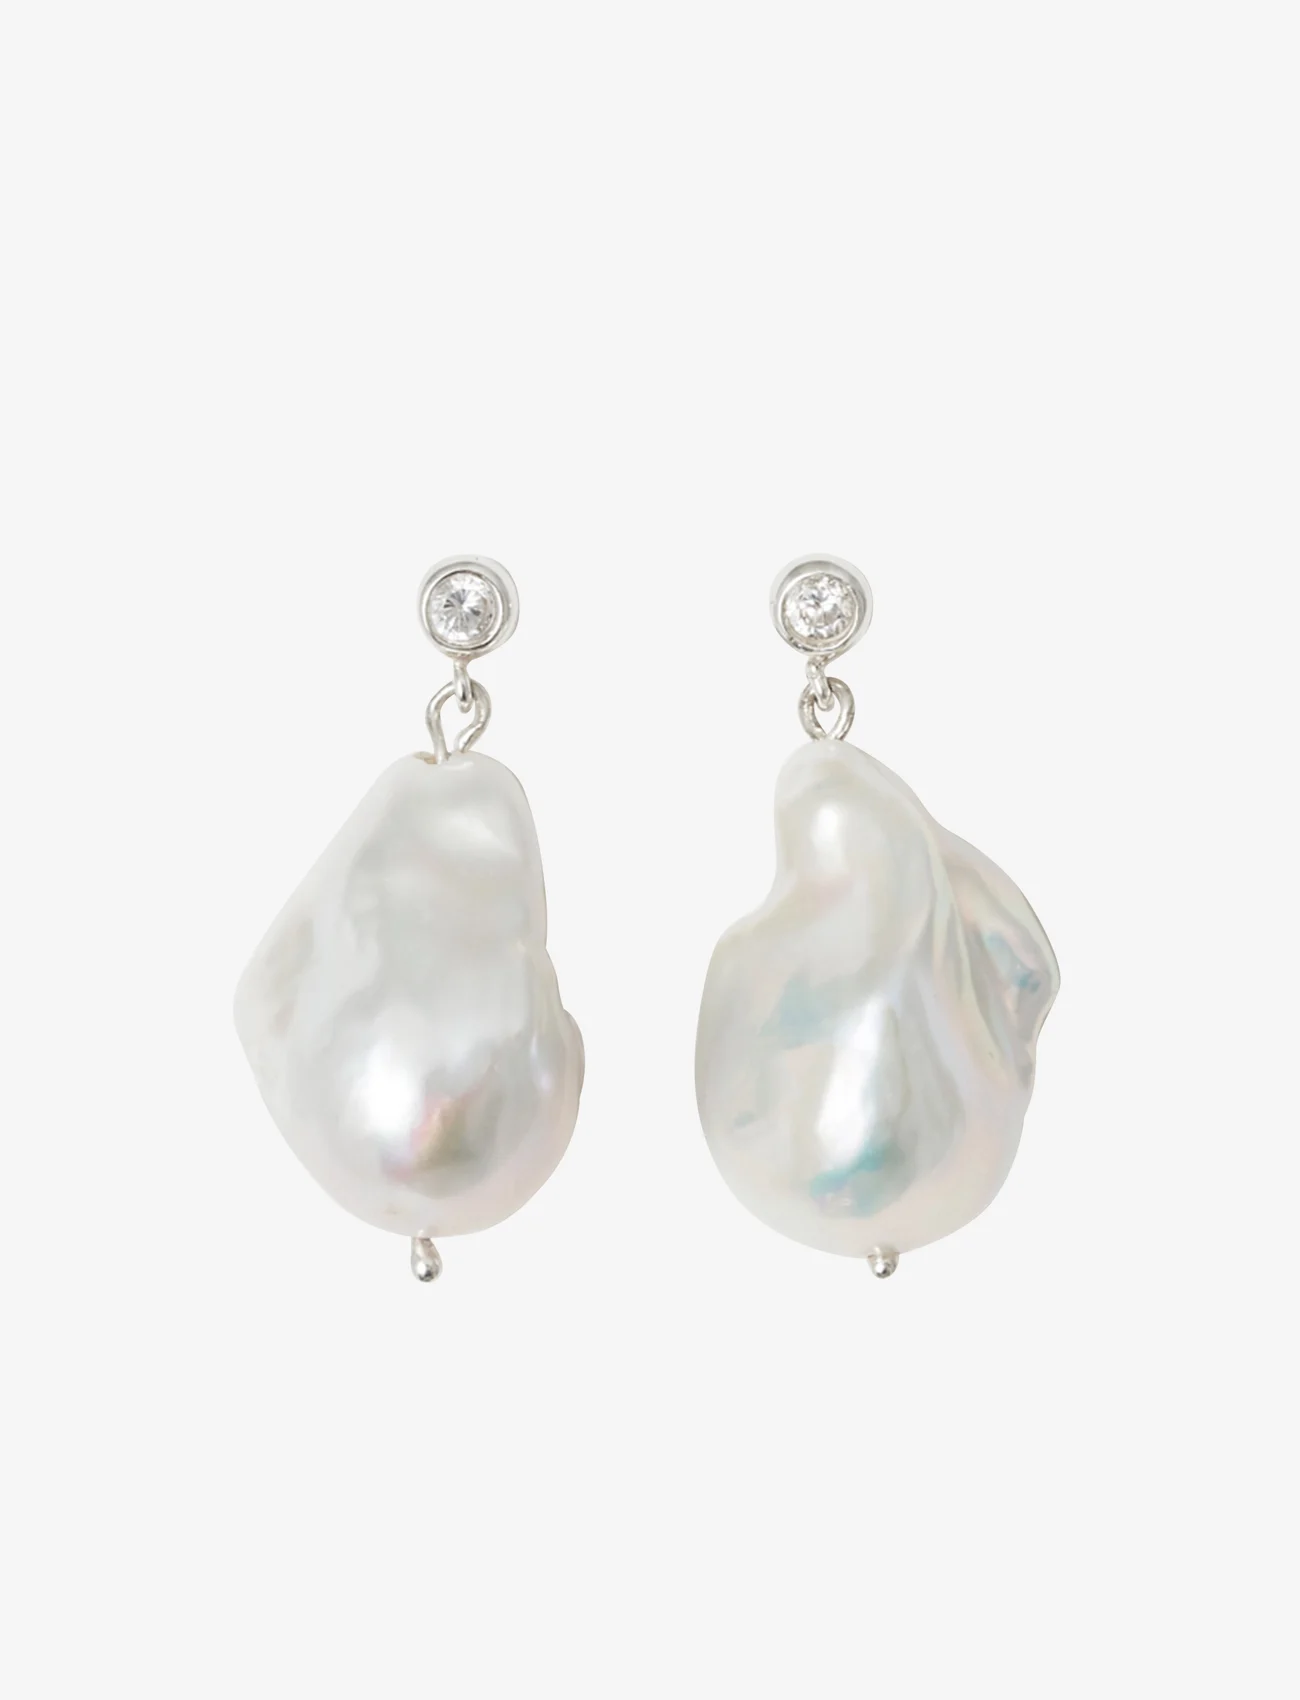 Blue Billie - Giant pearl earrings - perlenohrringe - silver - 1